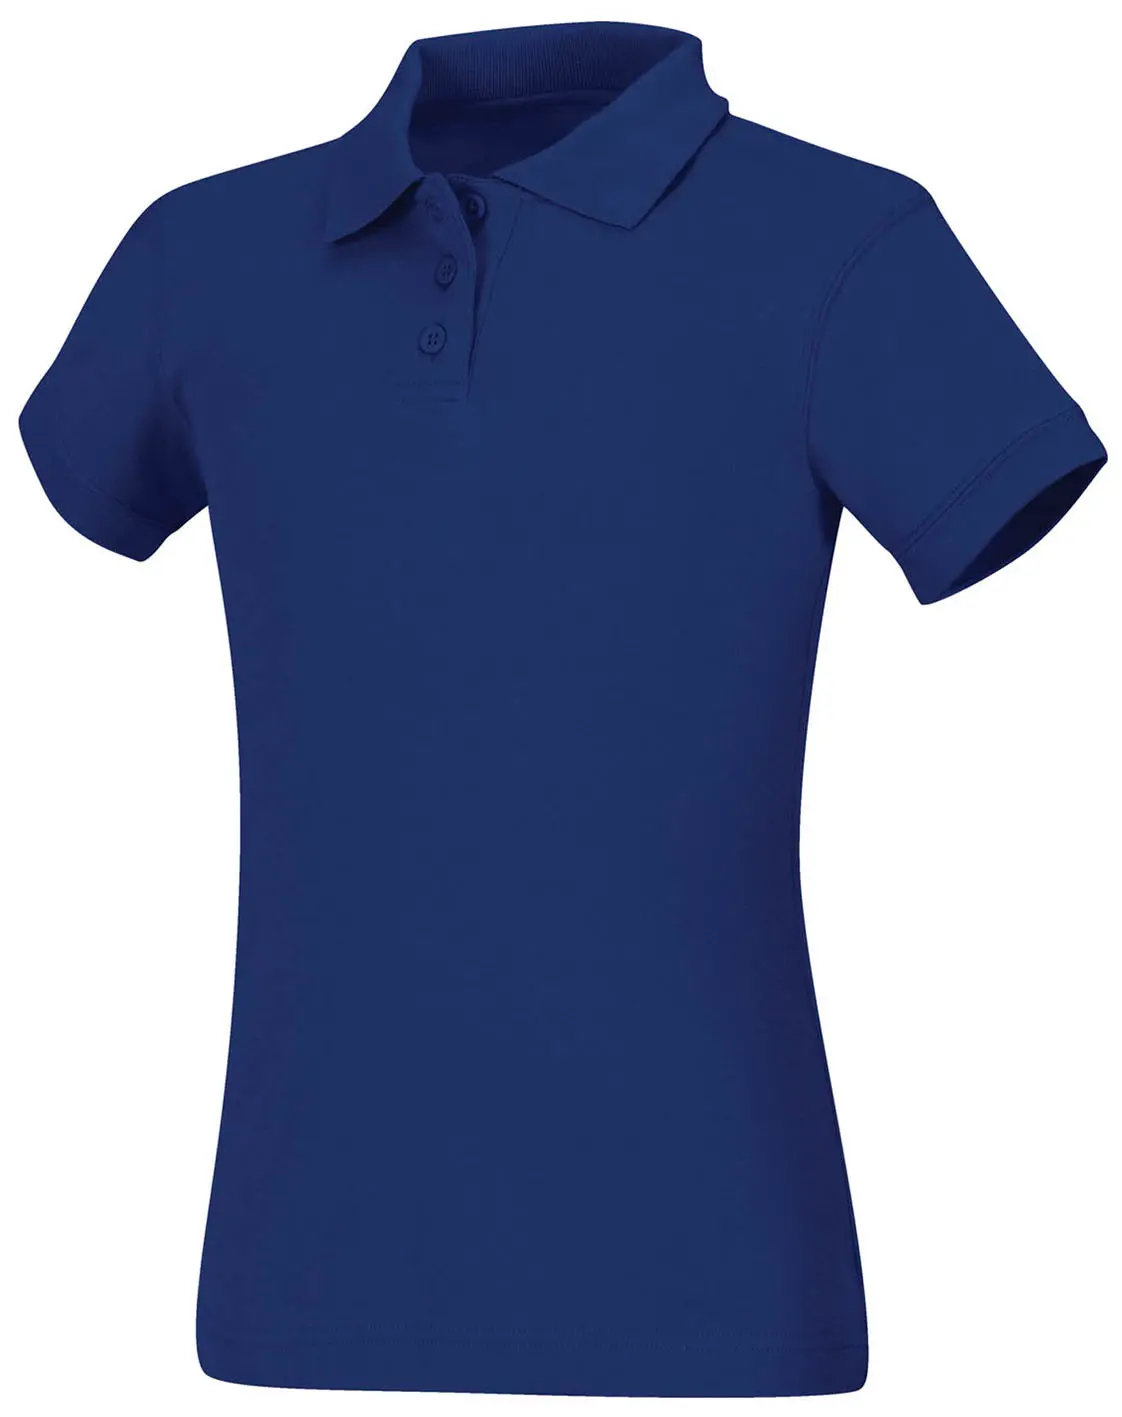 Girls Short Sleeve Fitted Interlock Polo-Classroom Uniforms